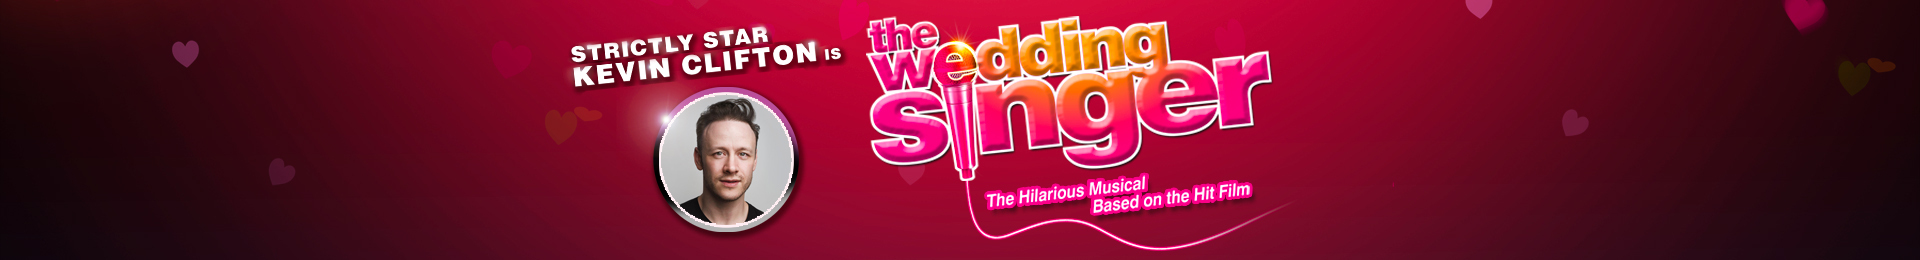 The Wedding Singer banner image